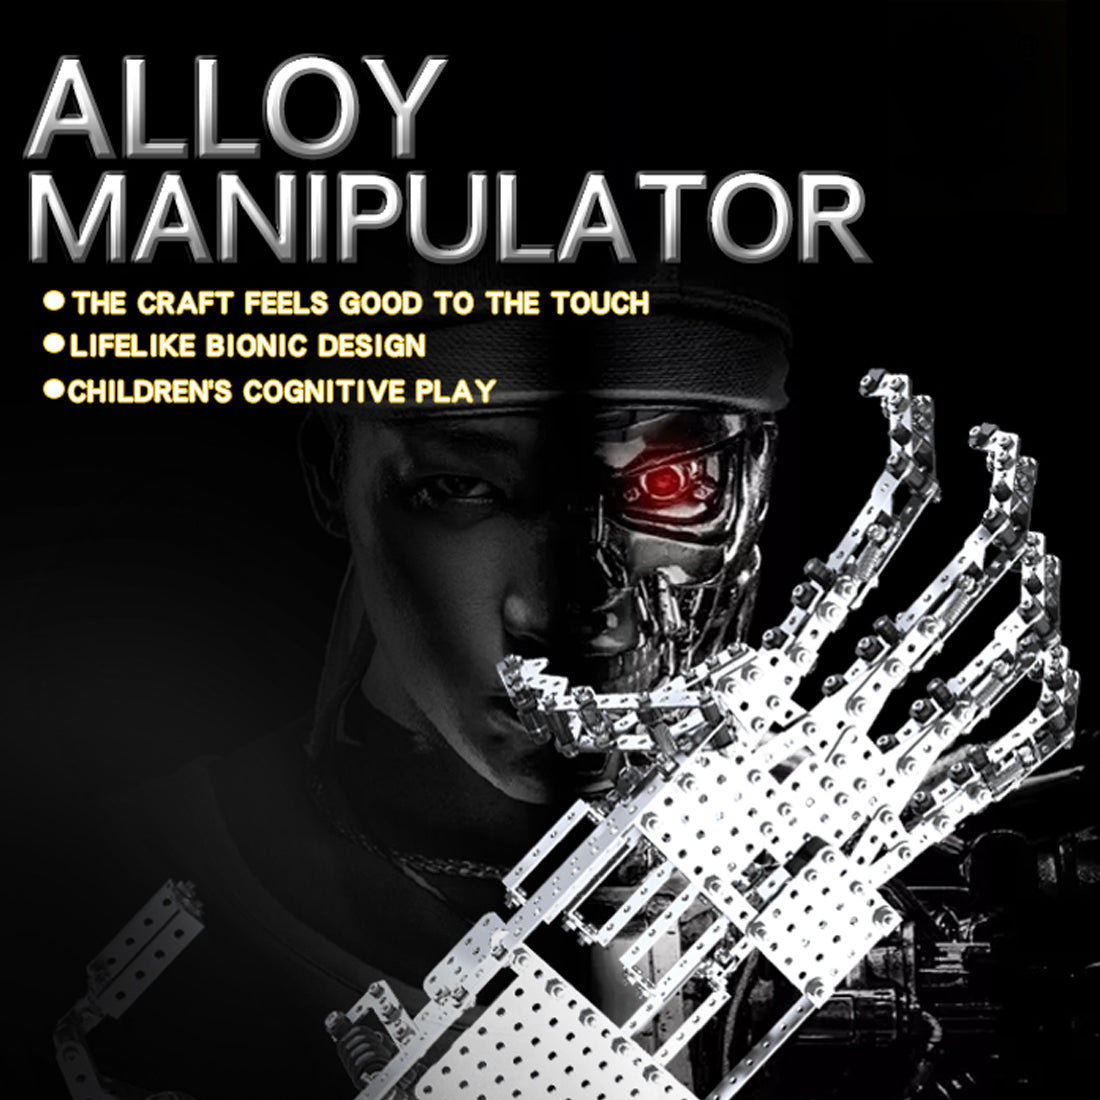 822Pcs Alloy Manipulator Assembly Model DIY Metal Screw Puzzle Kit Adults Kids Toys